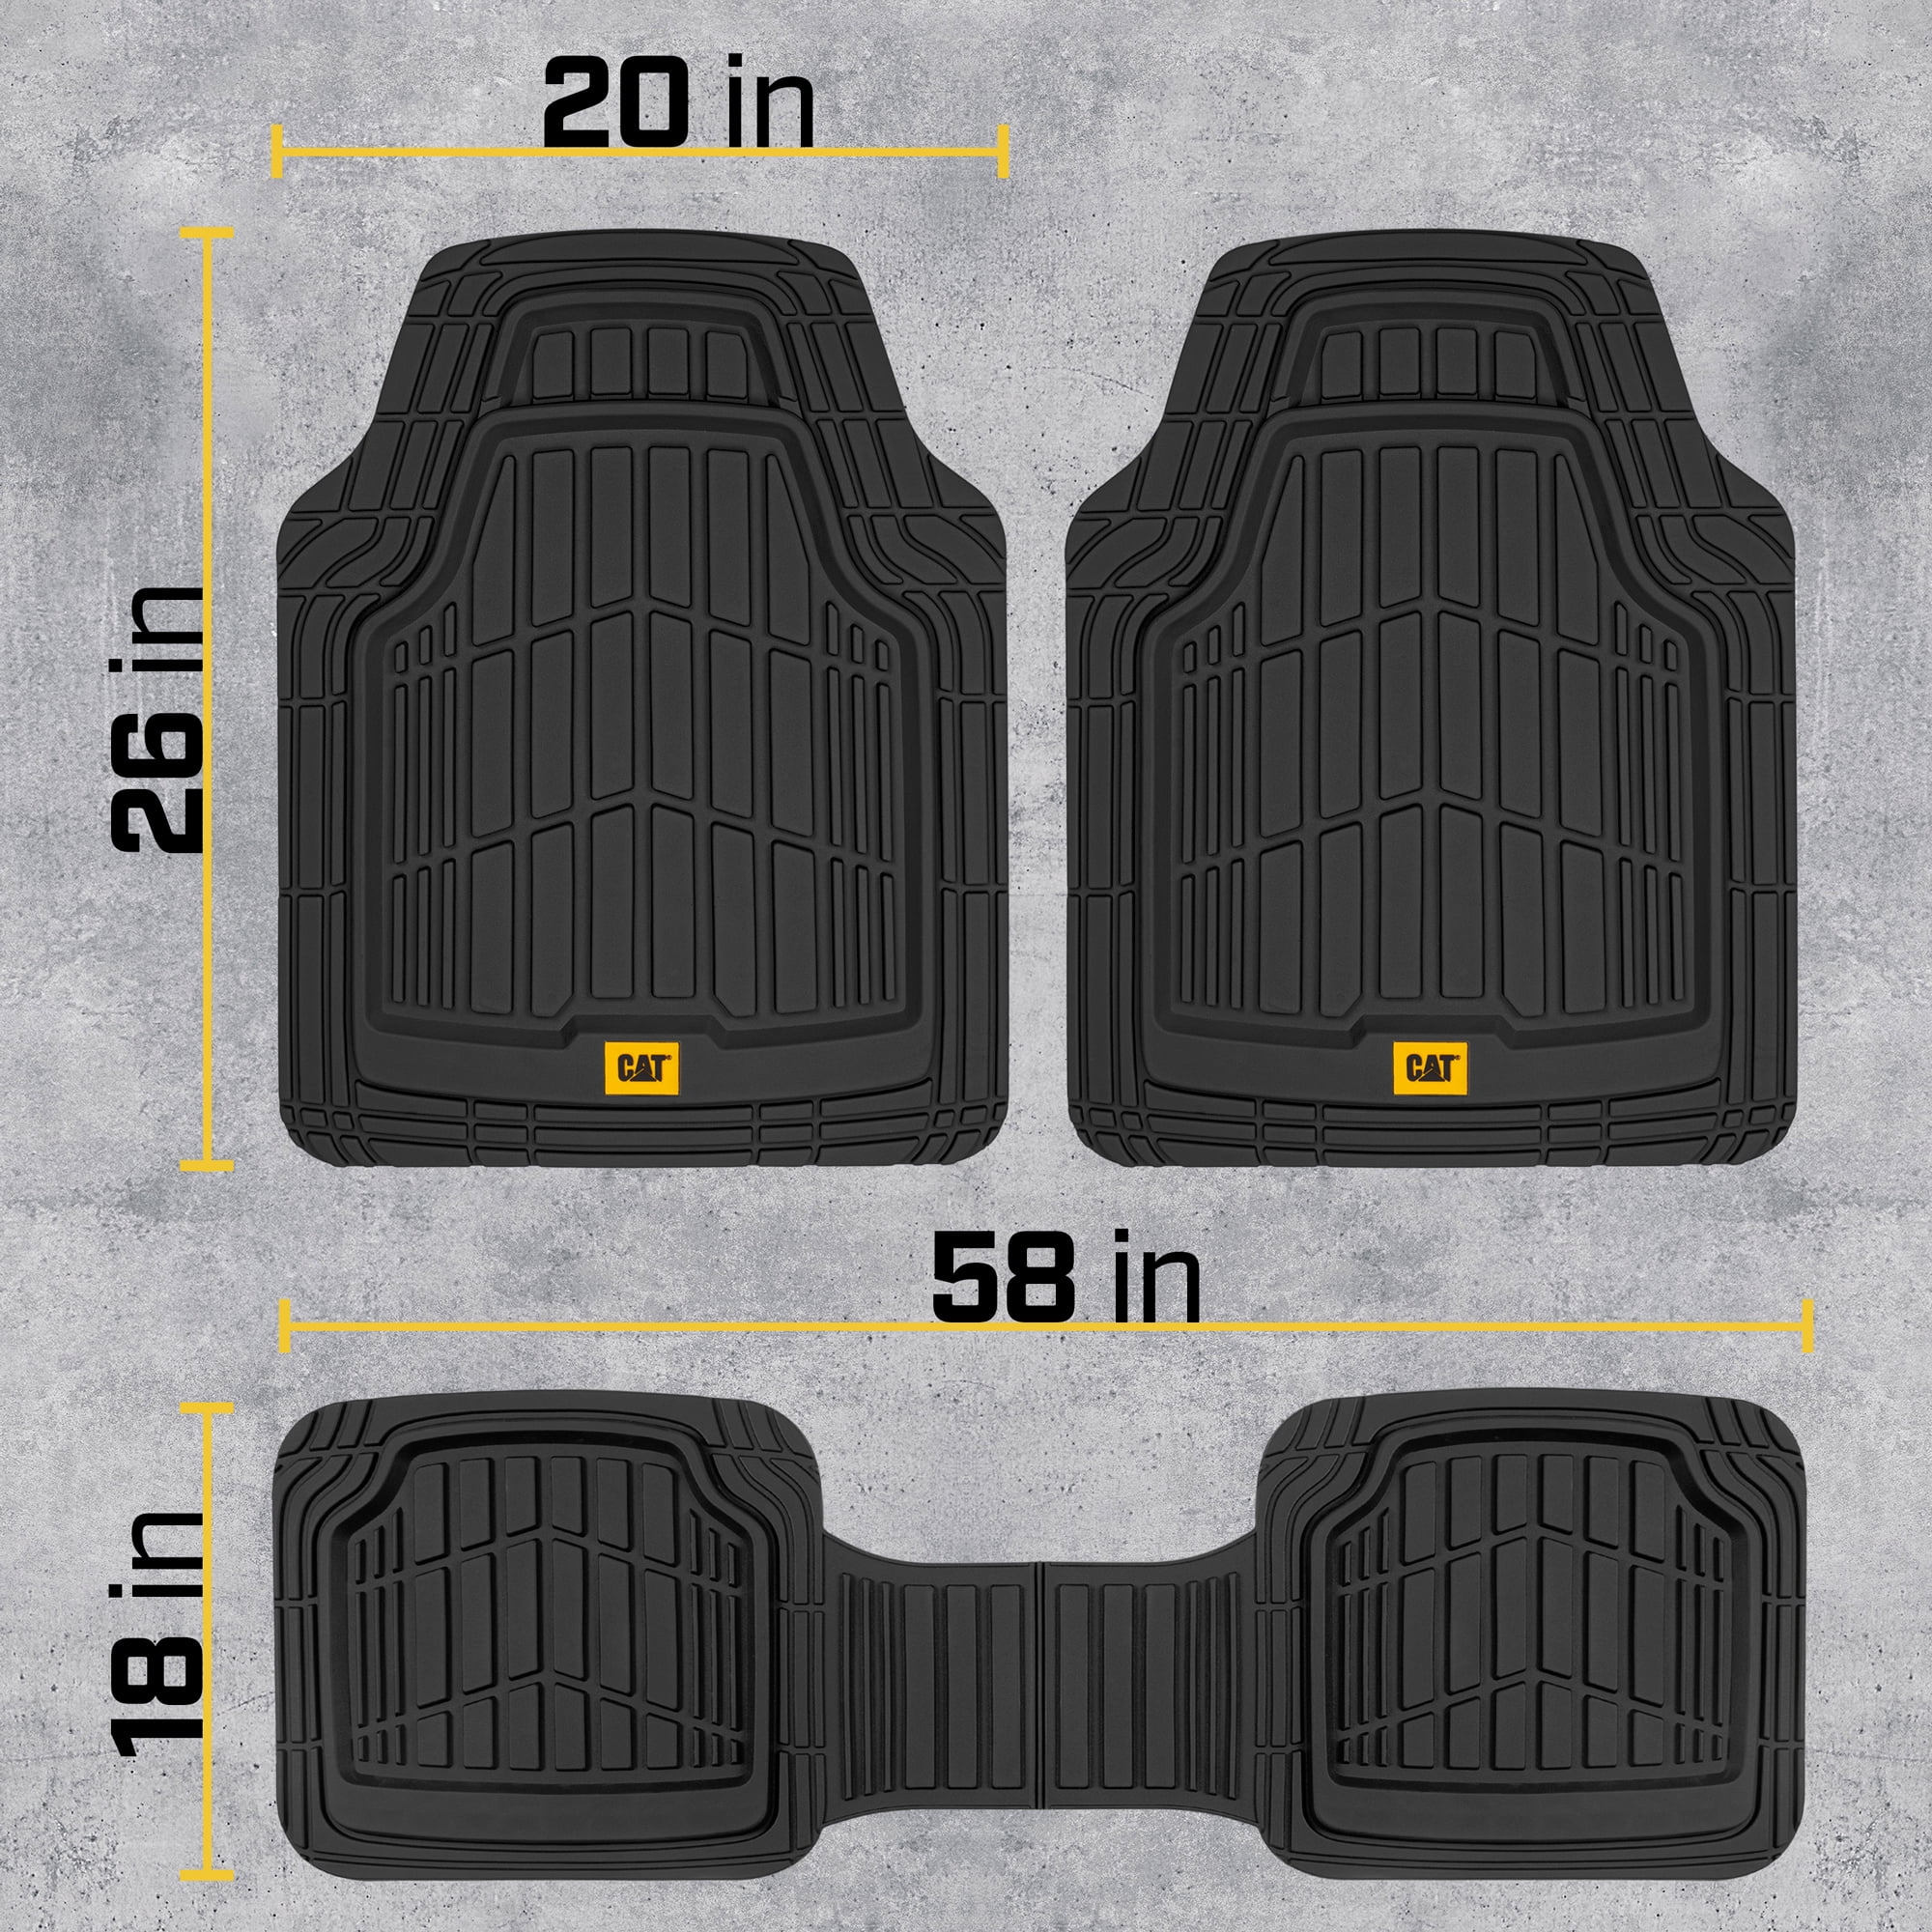 Cat XL Series Heavy-Duty Rubber Floor Mats & Cargo Trunk Liner for Car SUV Van Sedan, Black - Trim to Fit, All Weather Deep Dish Automotive Floor